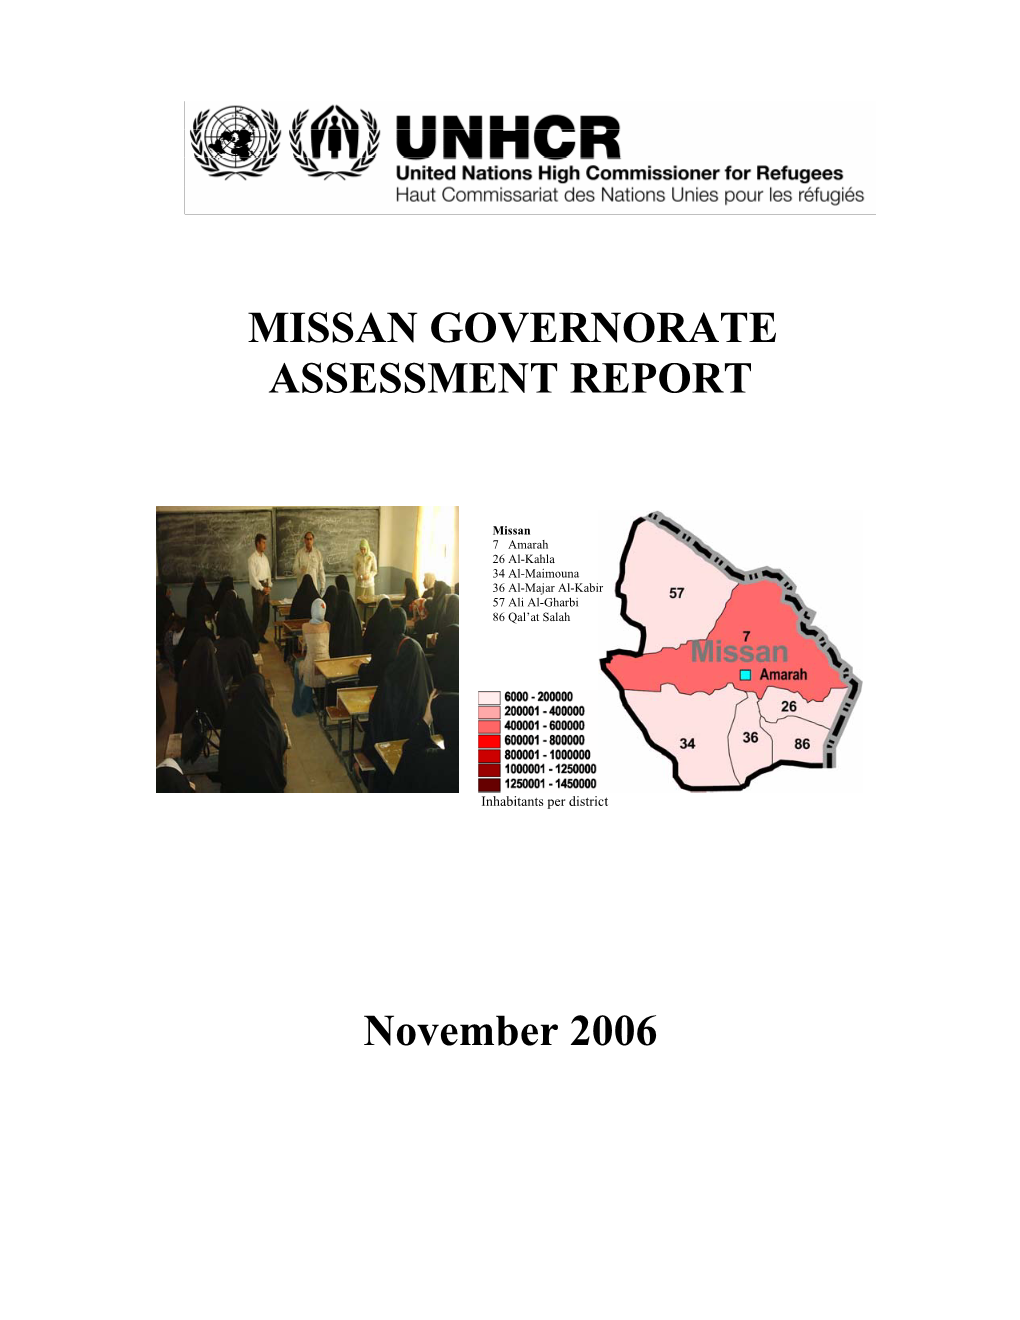 MISSAN GOVERNORATE ASSESSMENT REPORT November